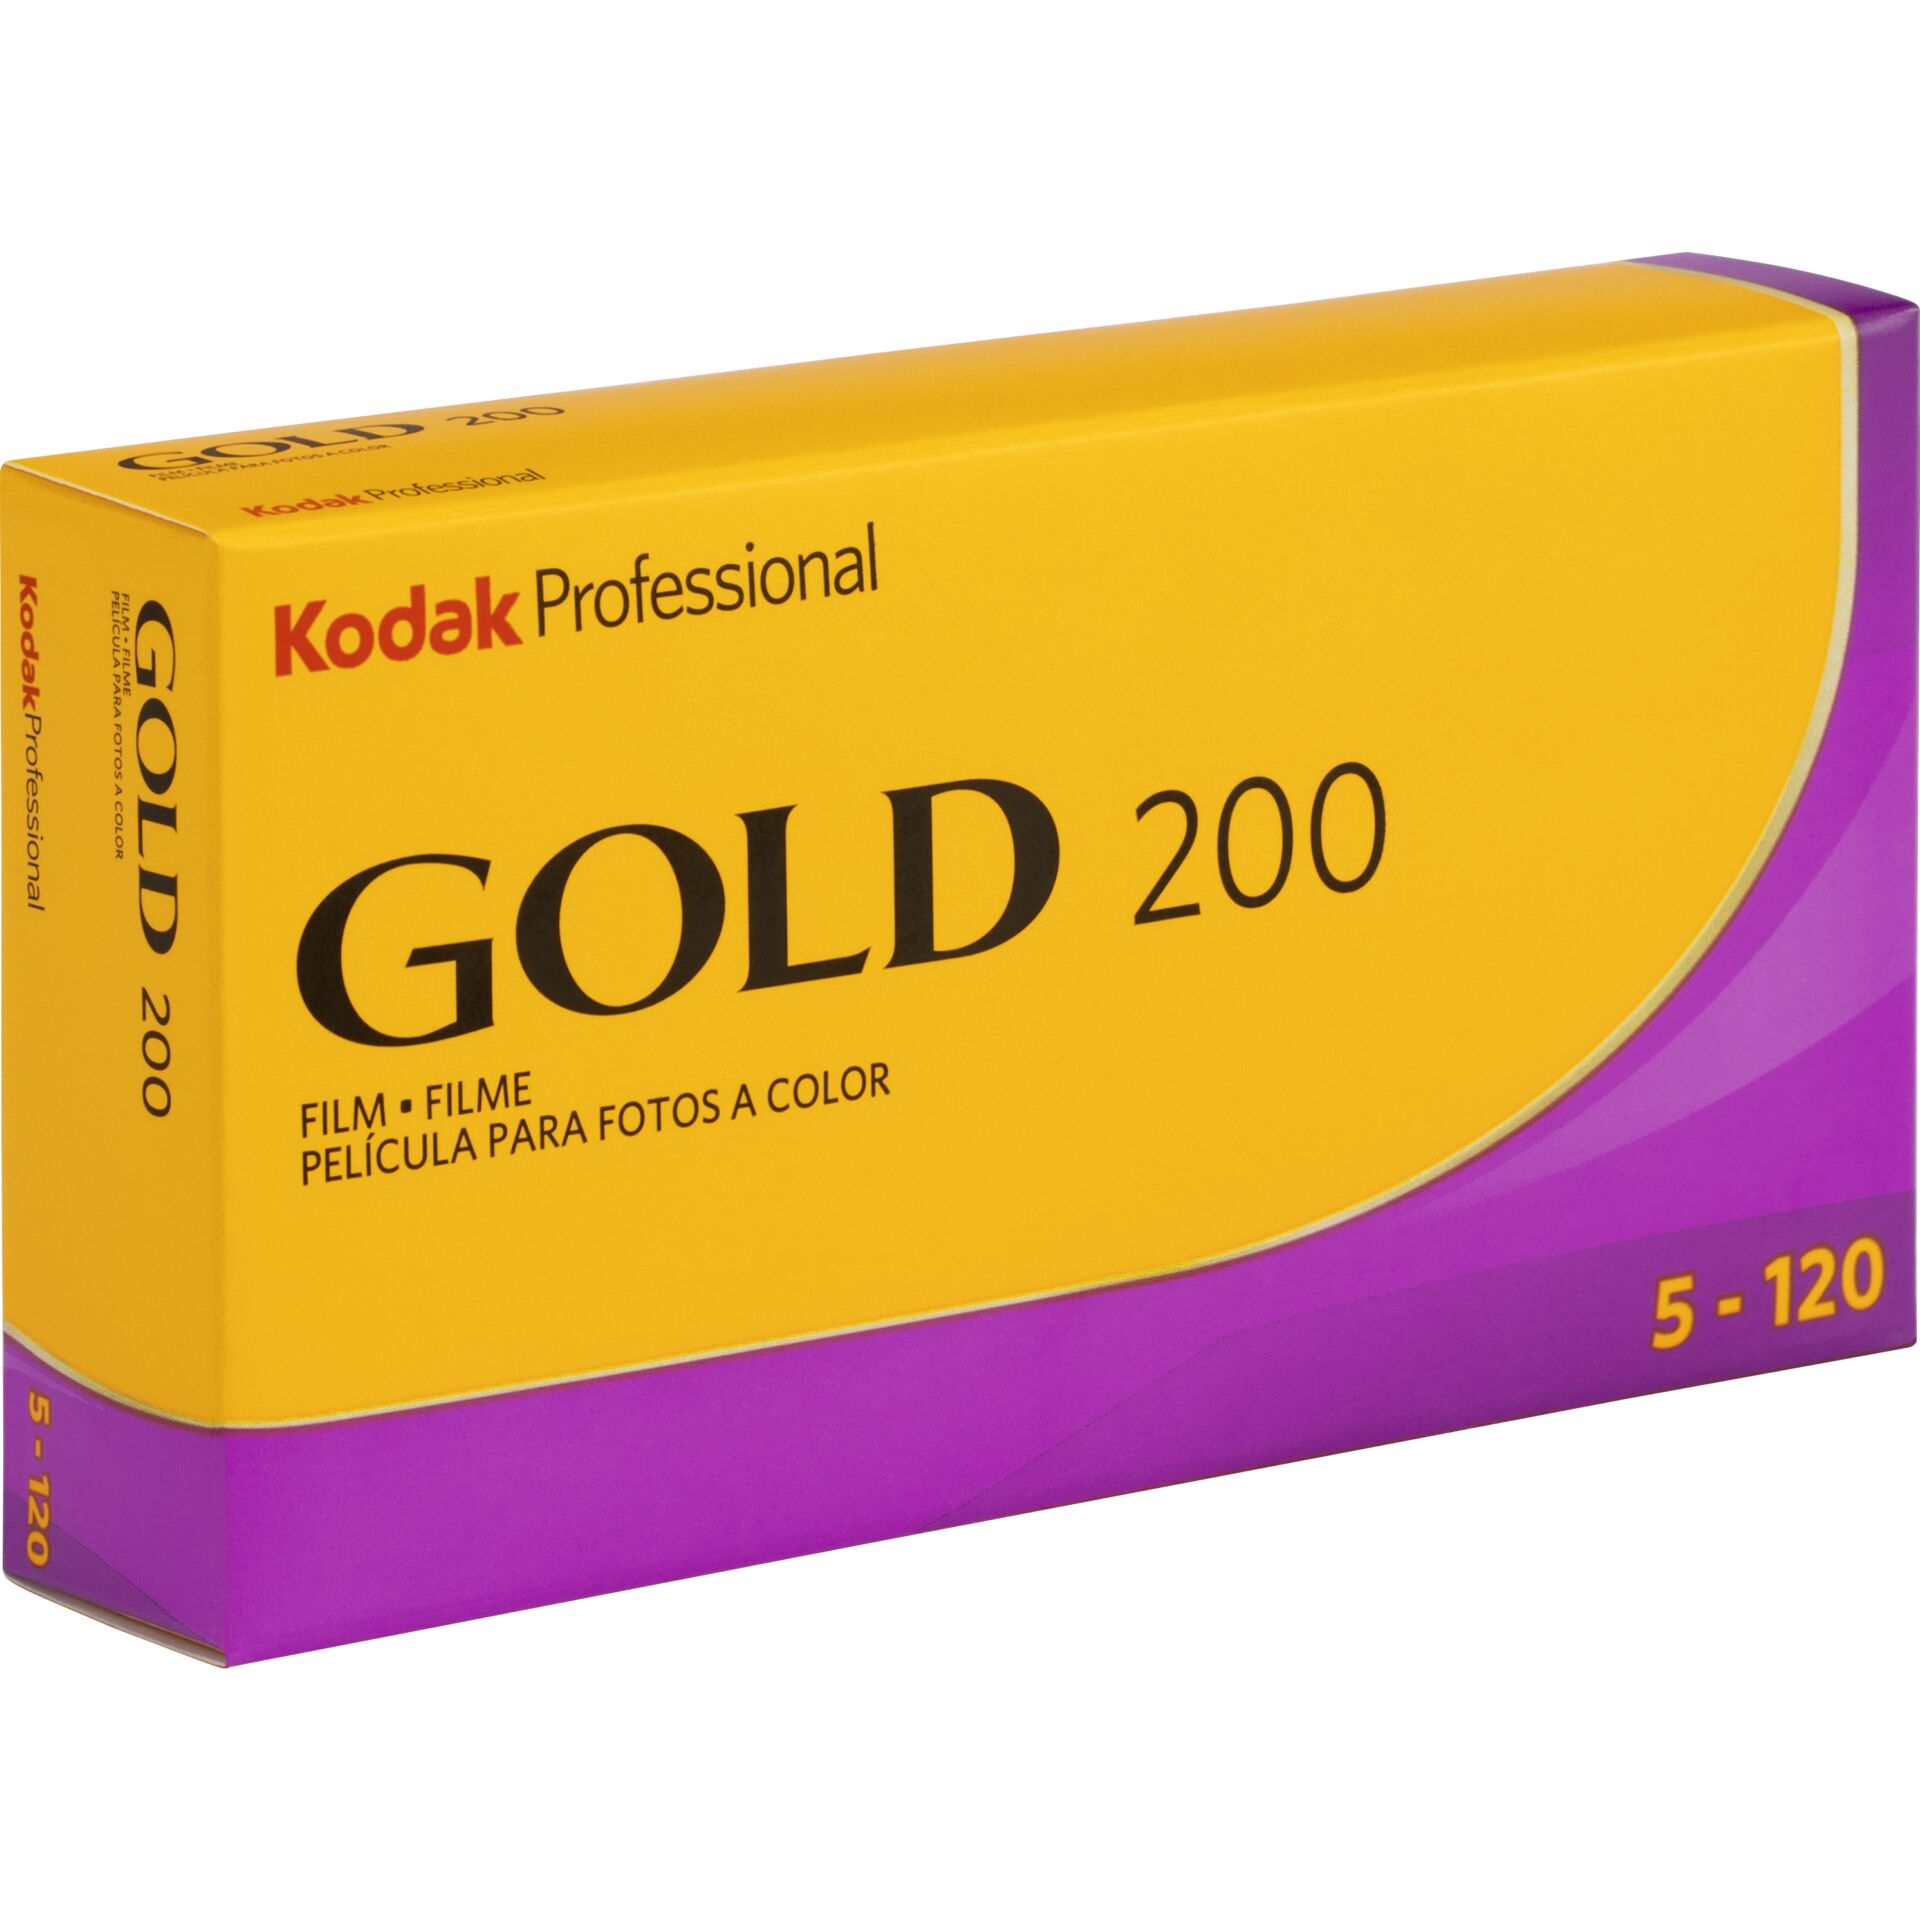 1x5 Kodak Gold prof.  200 120